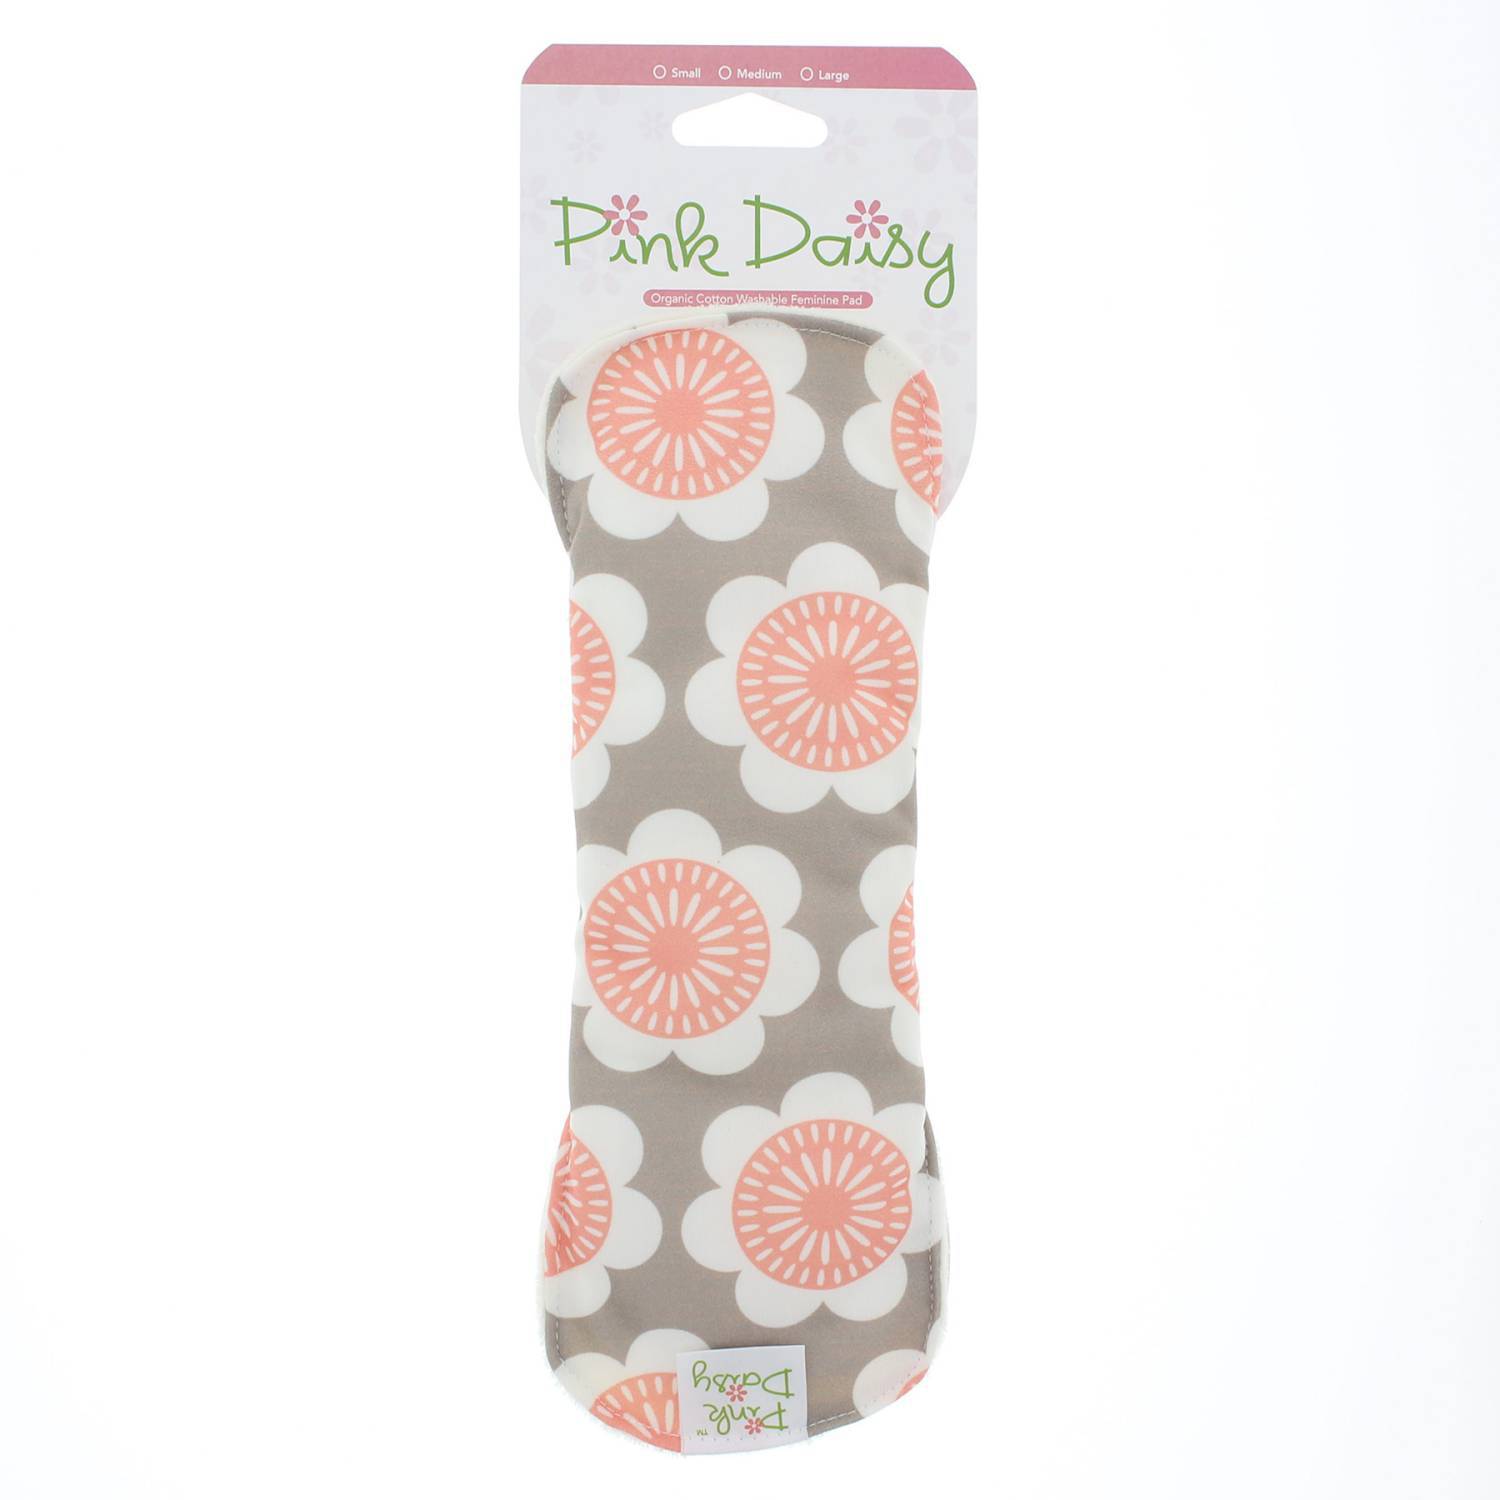 Pink Daisy Cloth Pads (Organic Cotton)